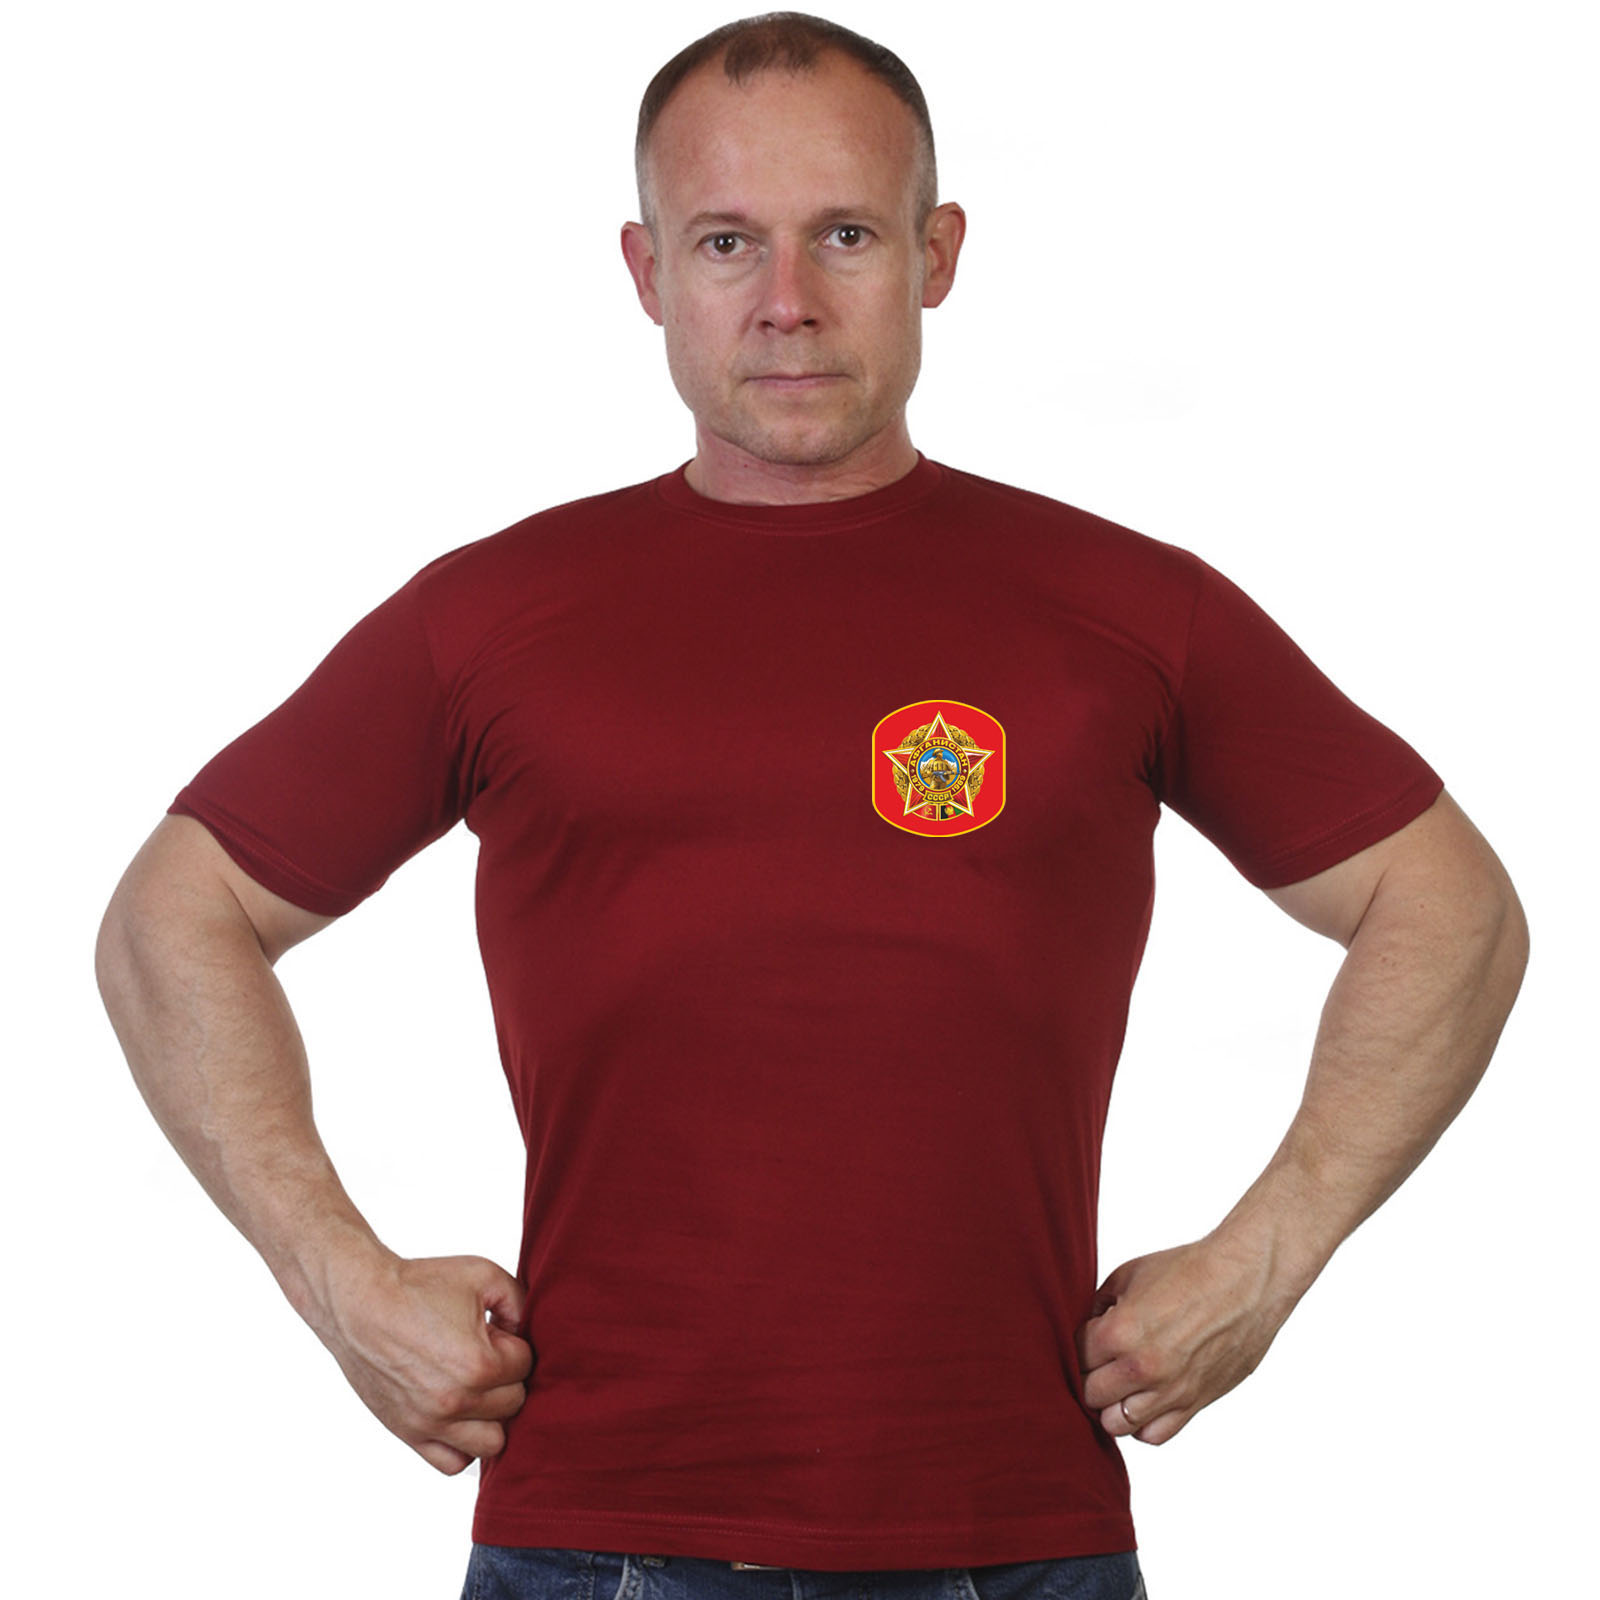 Краповая футболка с термотрансфером "Афганистан 1979-1989" 